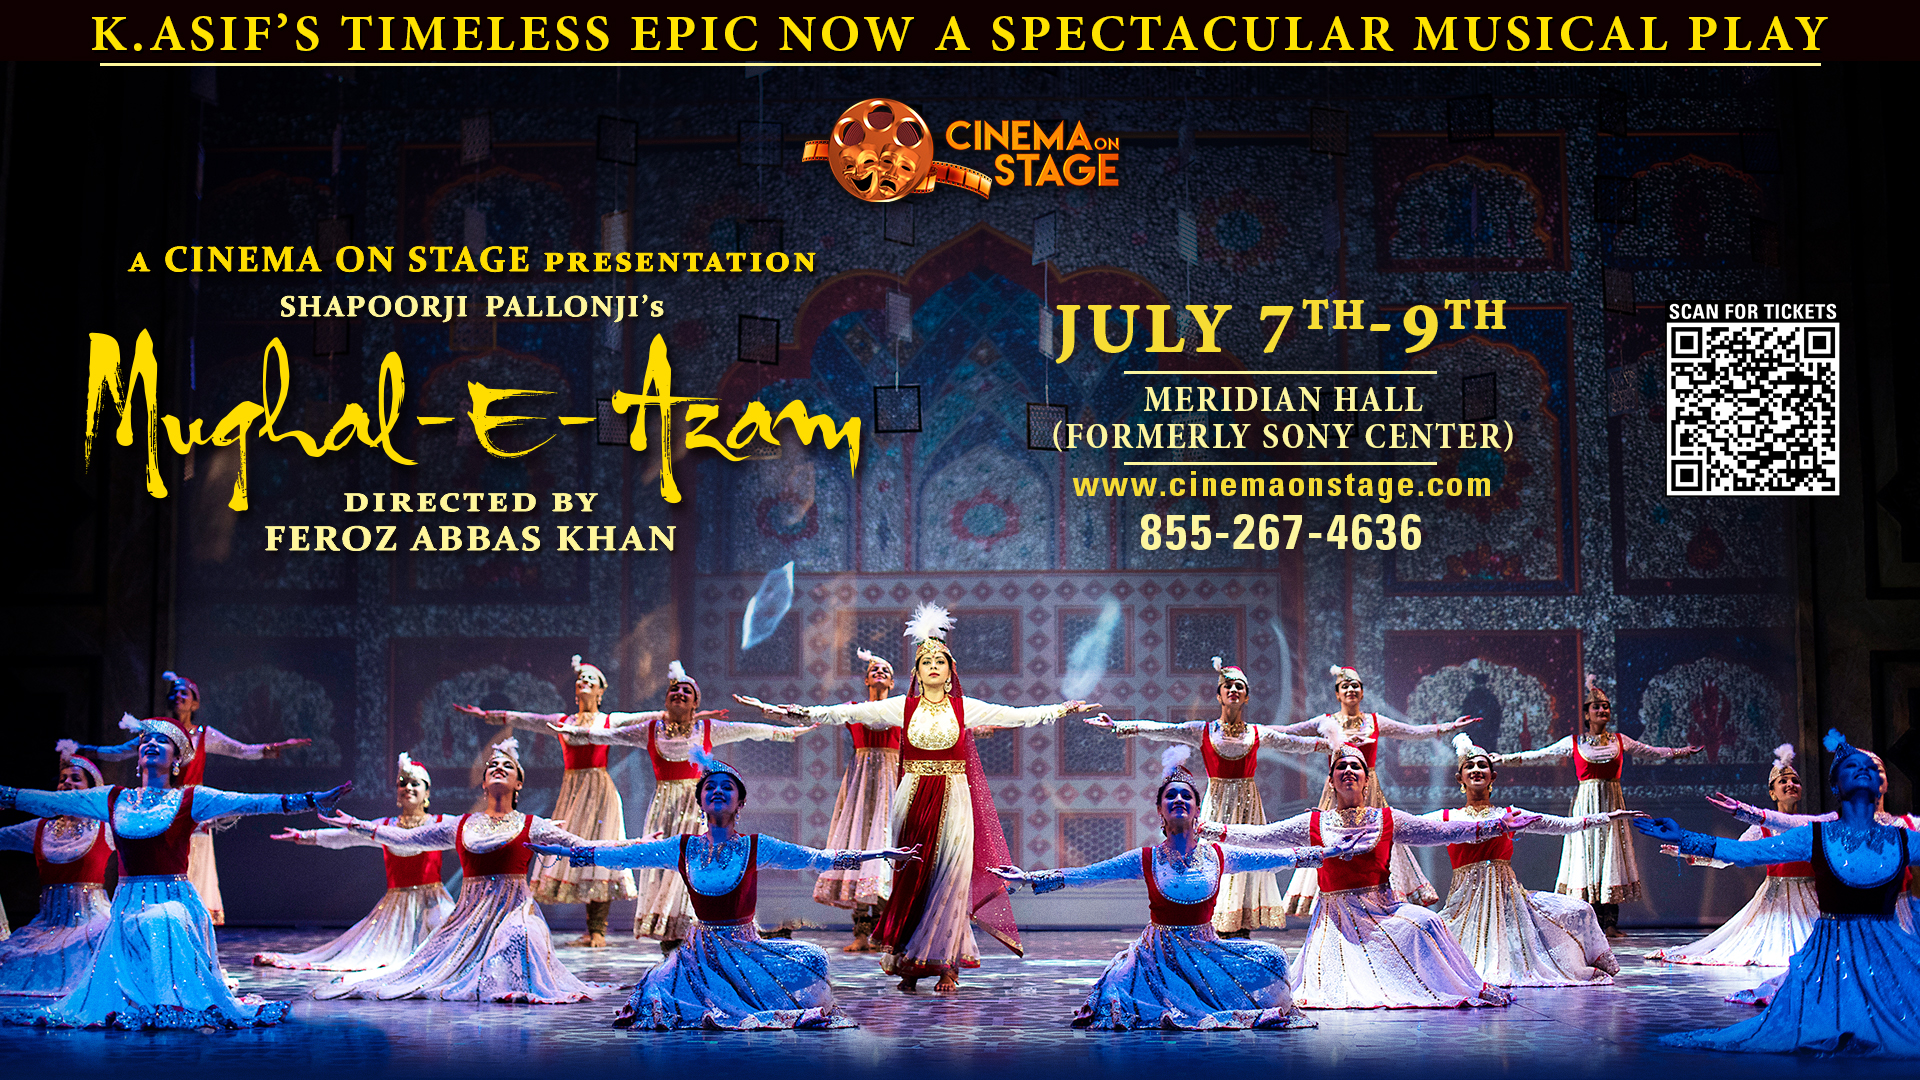 Event Alert: “Mughal-E-Azam” The Play Kicks Off Canadian Tour With Upcoming Toronto Stop